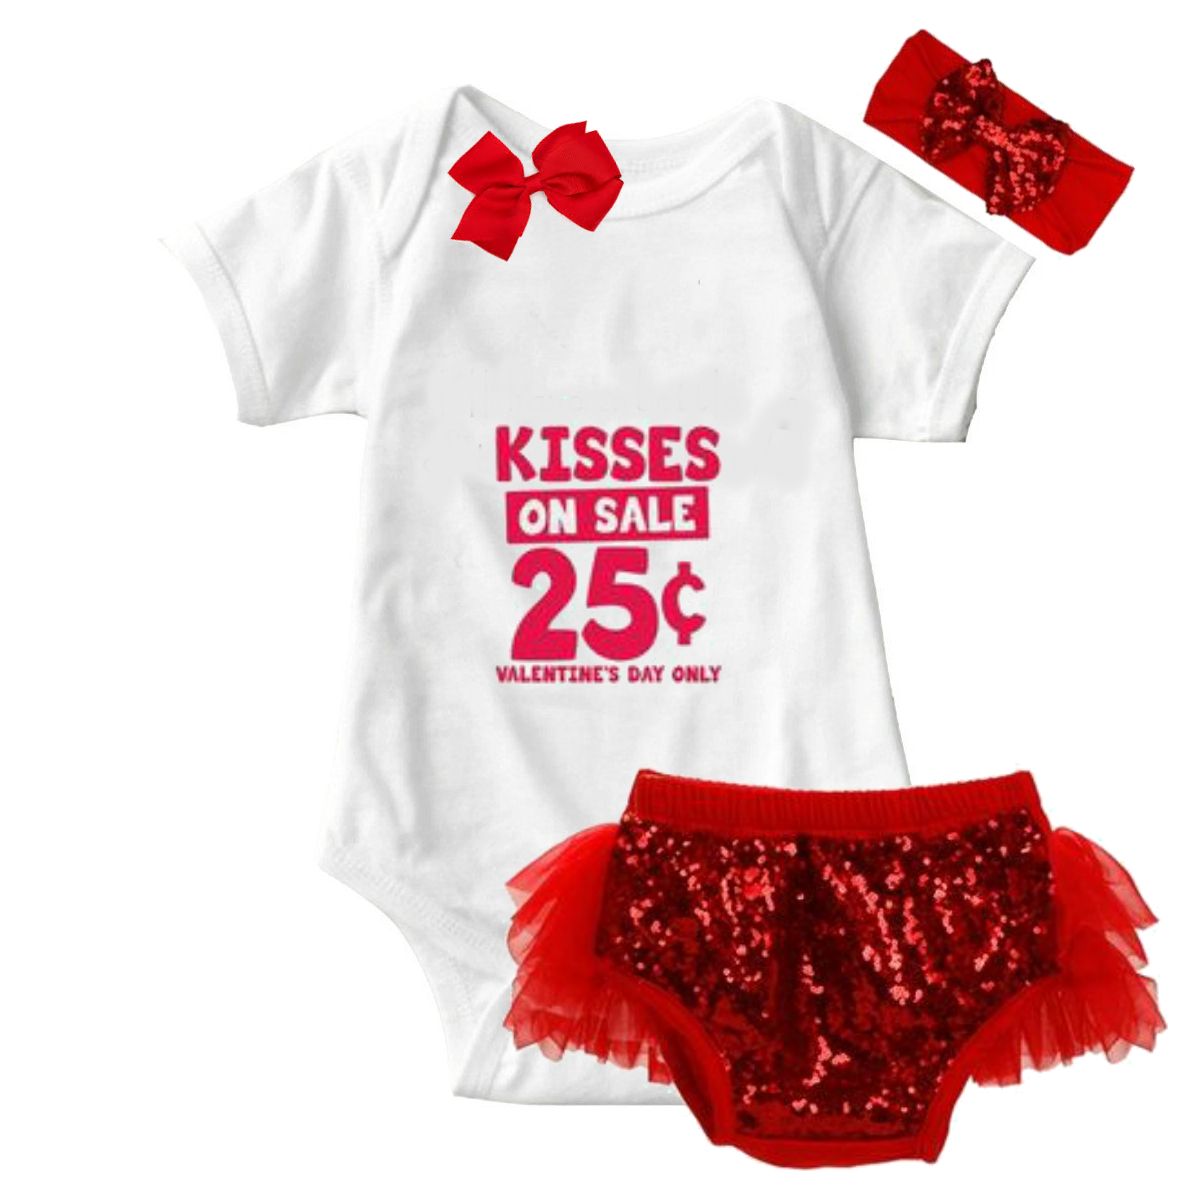 Kisses on Sale 25c Valentine White Onesie & Red Tutu Set Optional